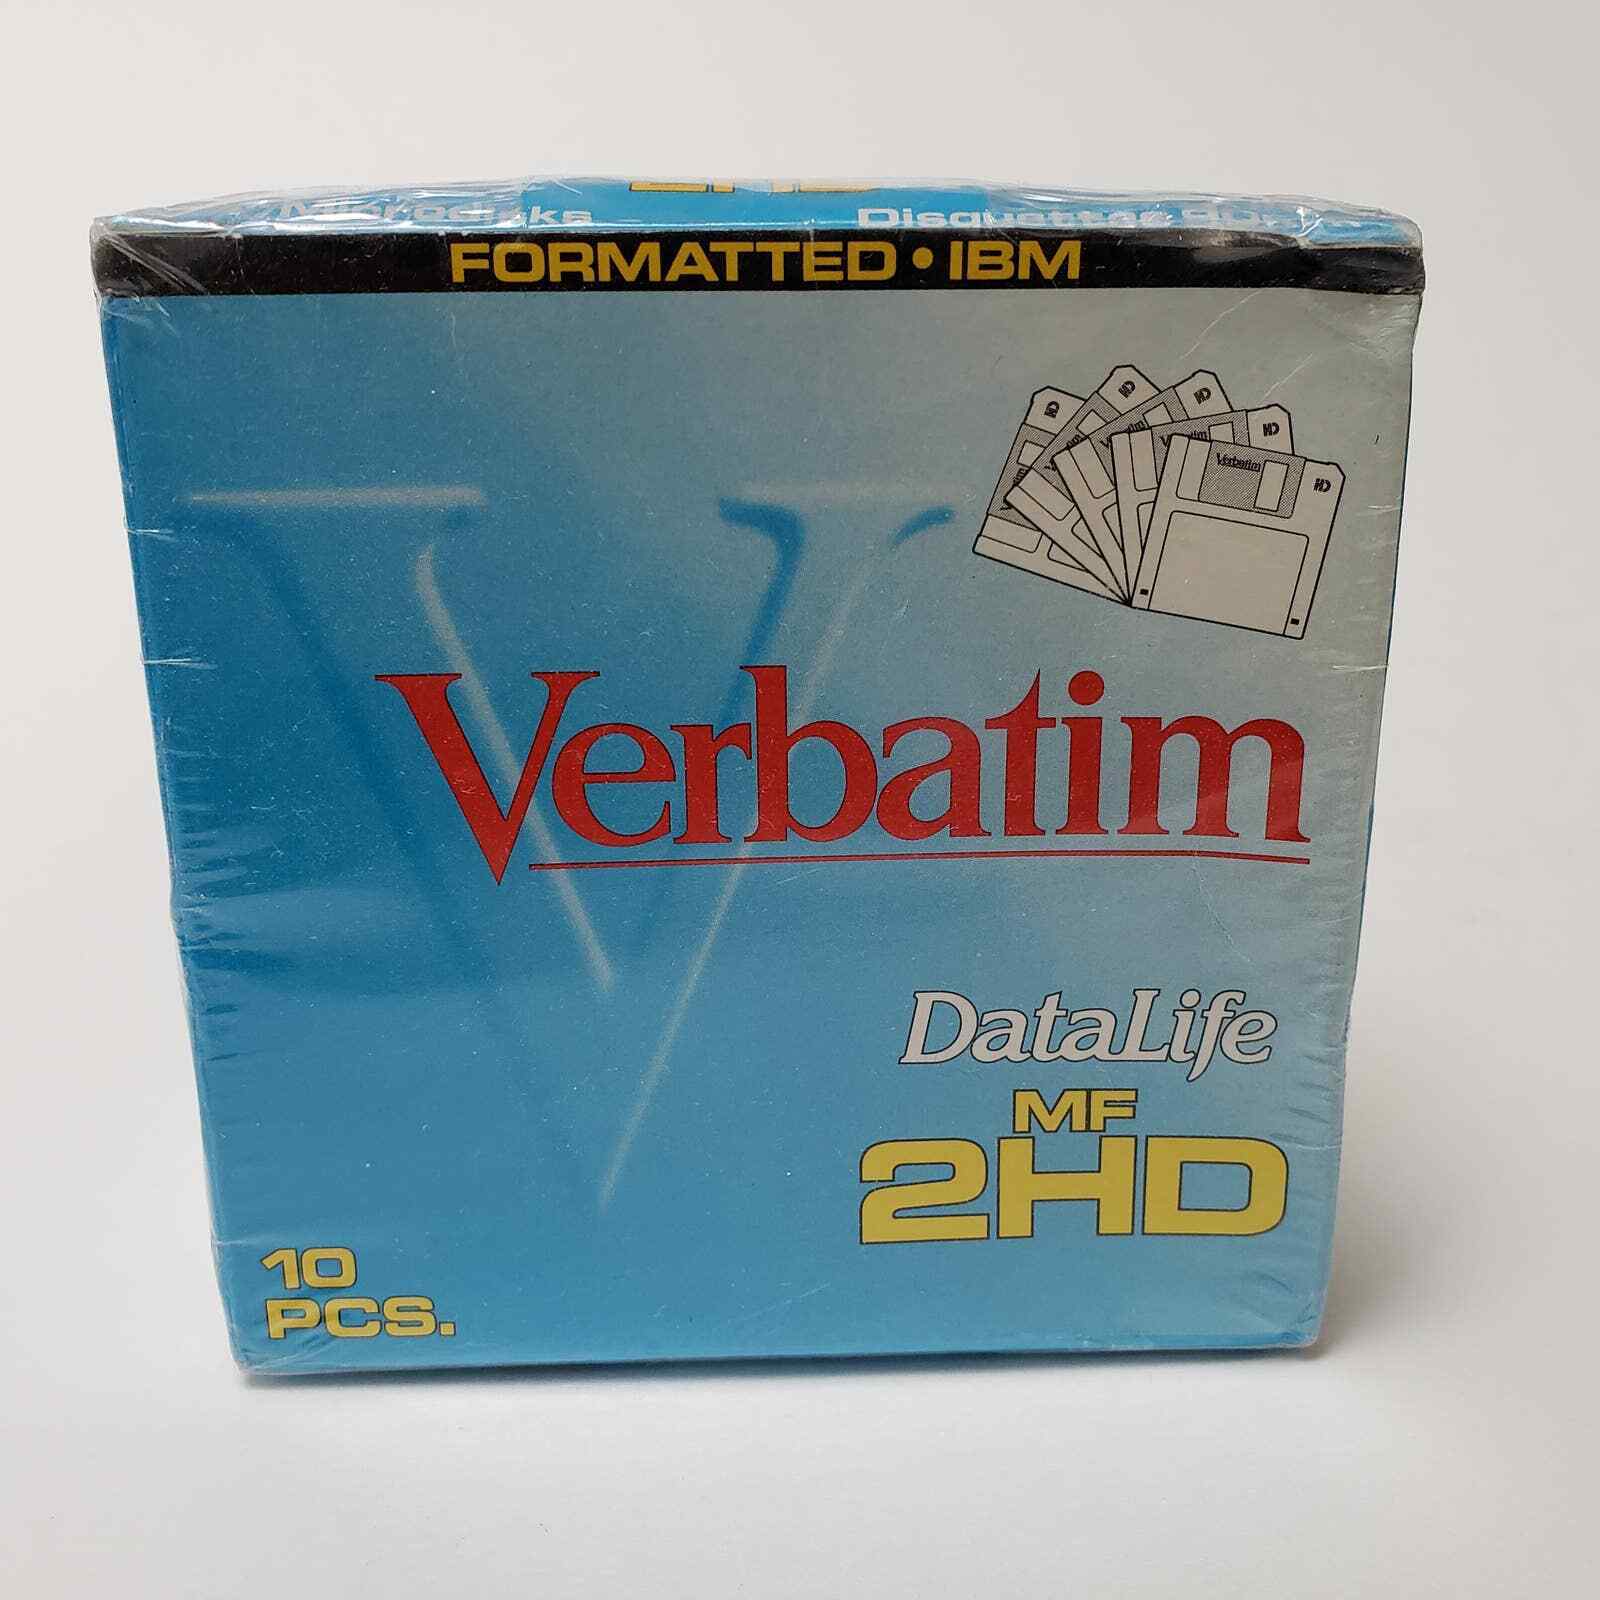 Verbatim DataLife MF 2HD 3.5